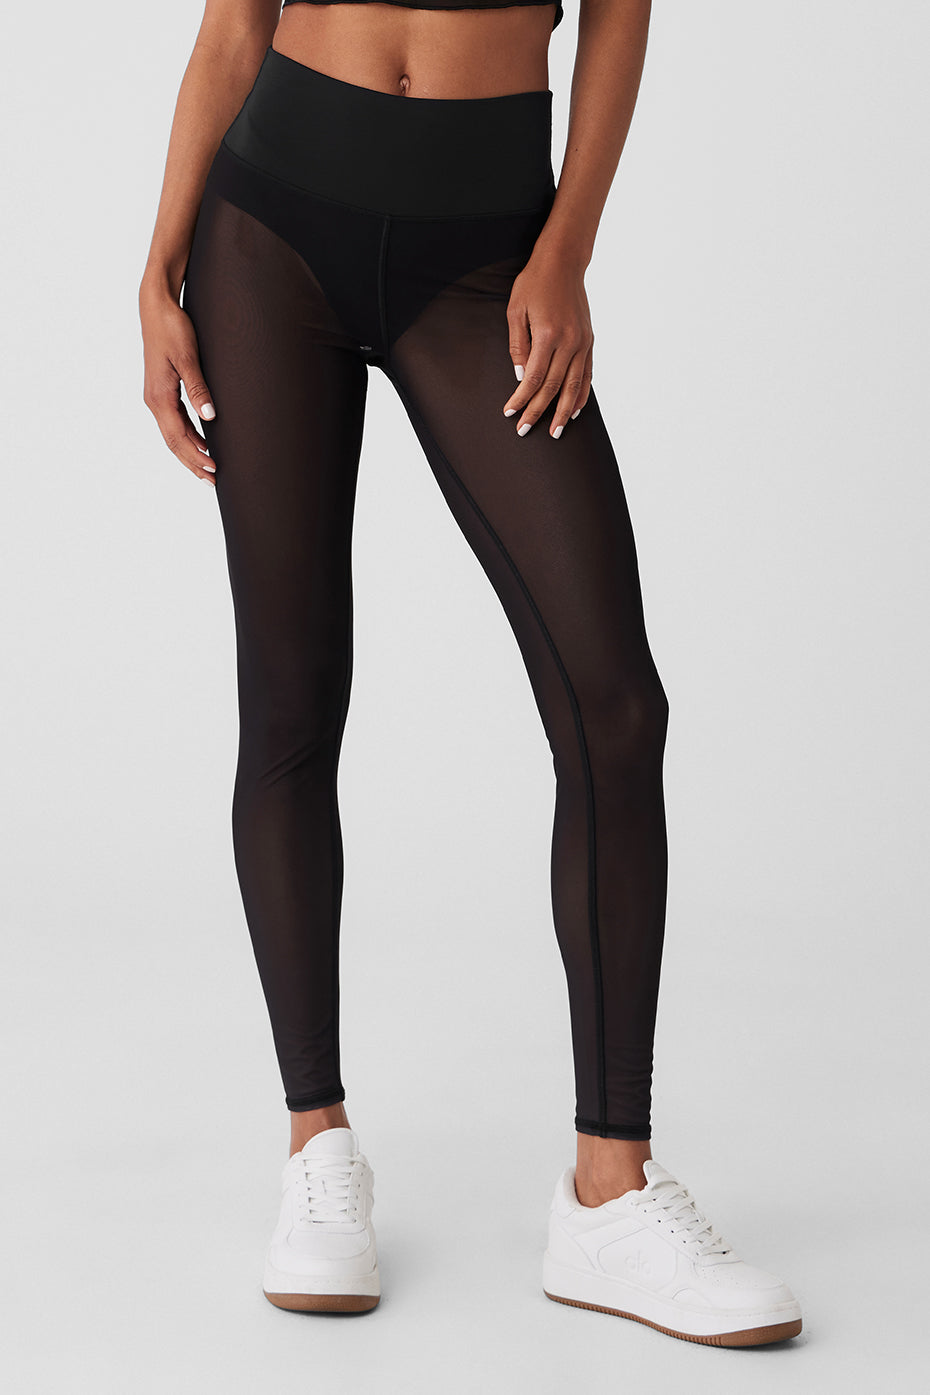 Lululemon Black Sheer Side Yoga Pants - Size 6